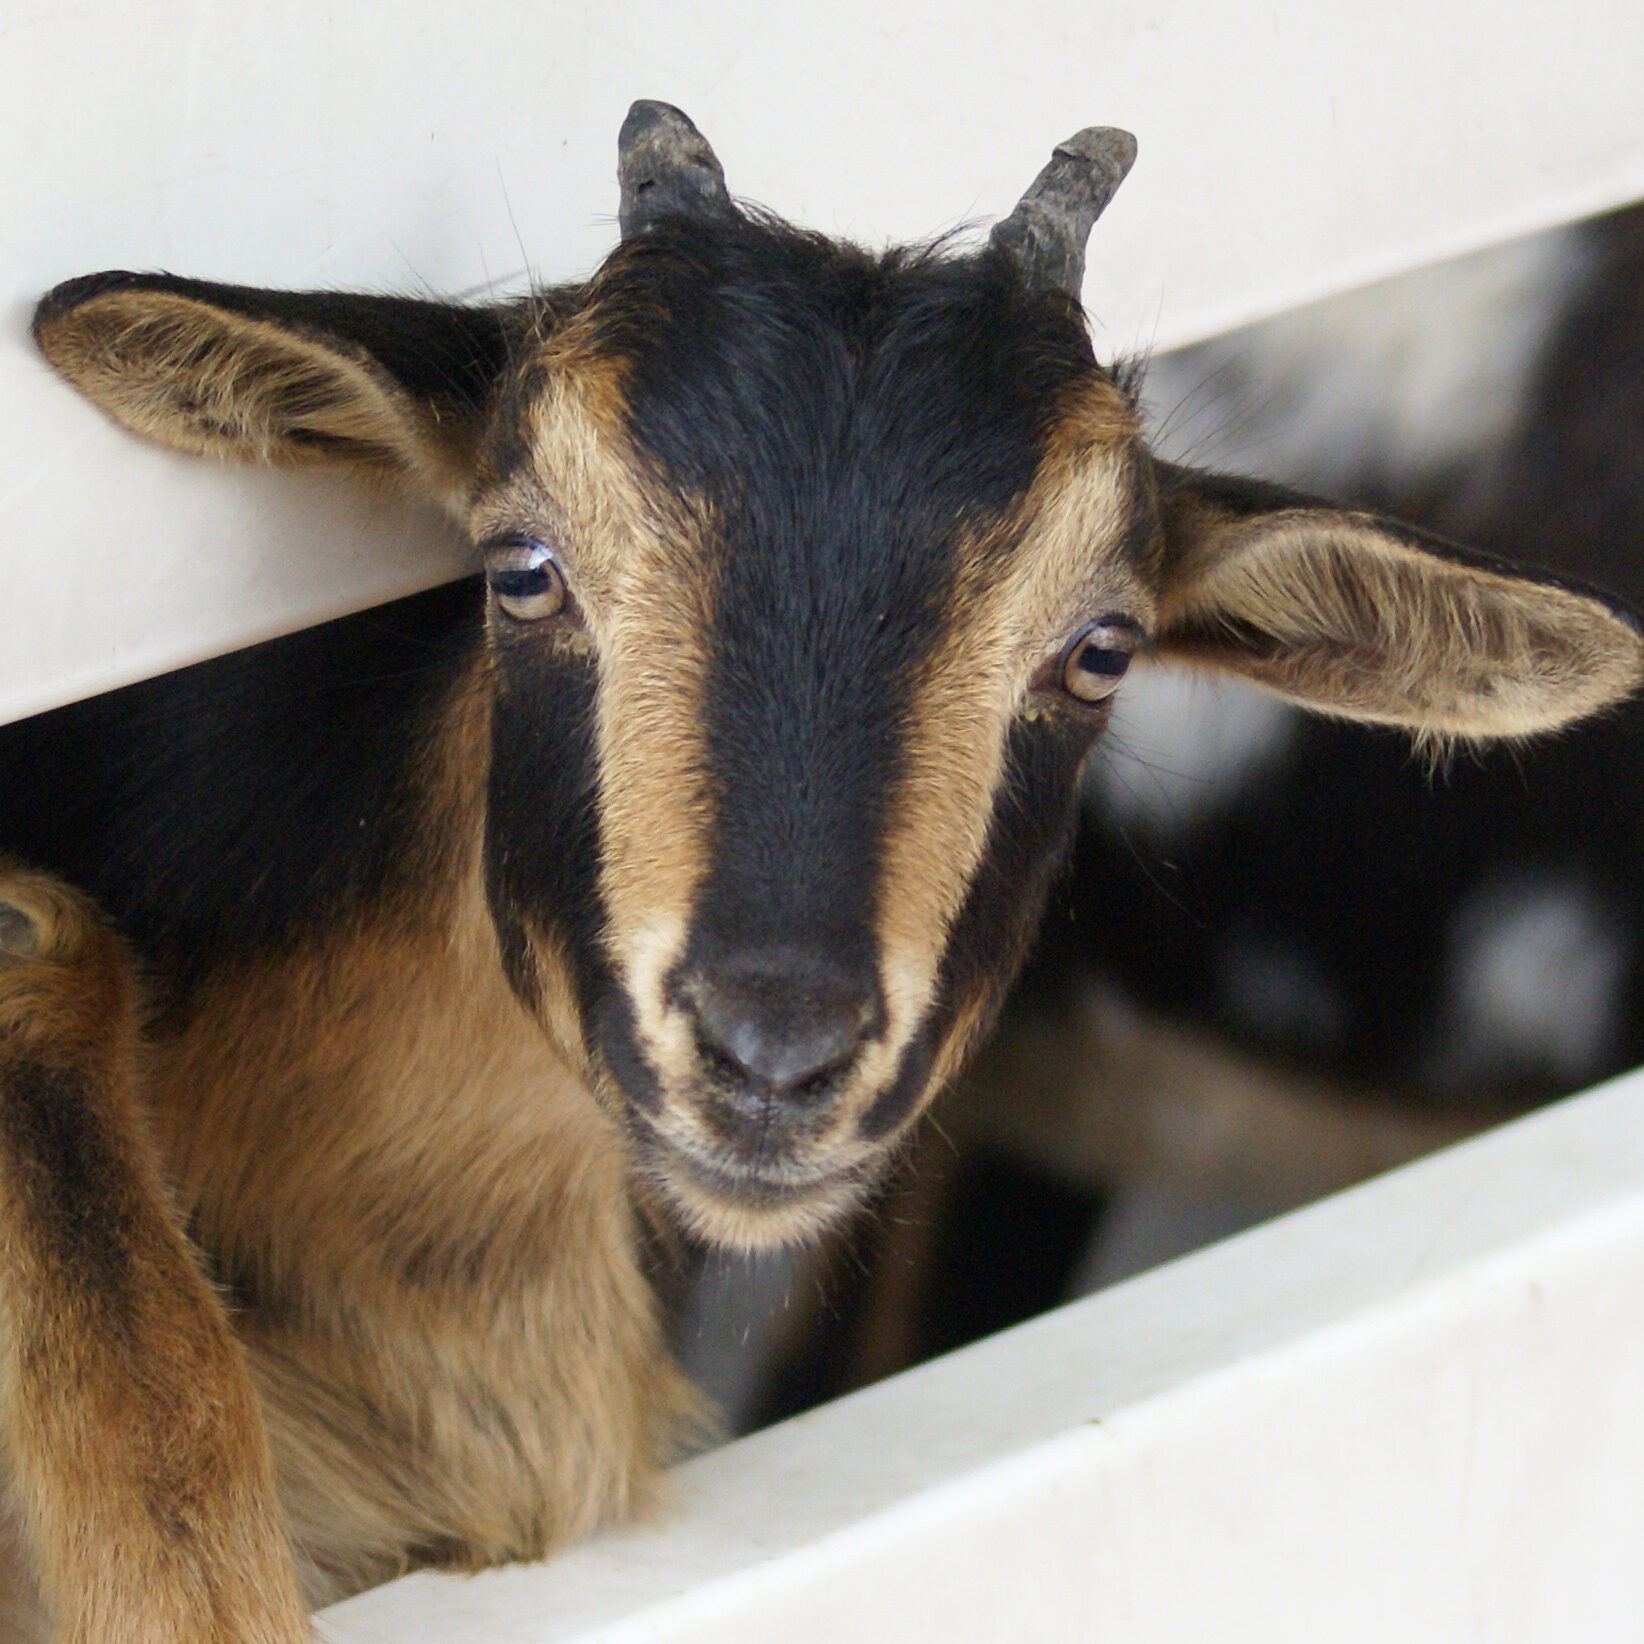 San Clemente Island Goat peeking through a fence